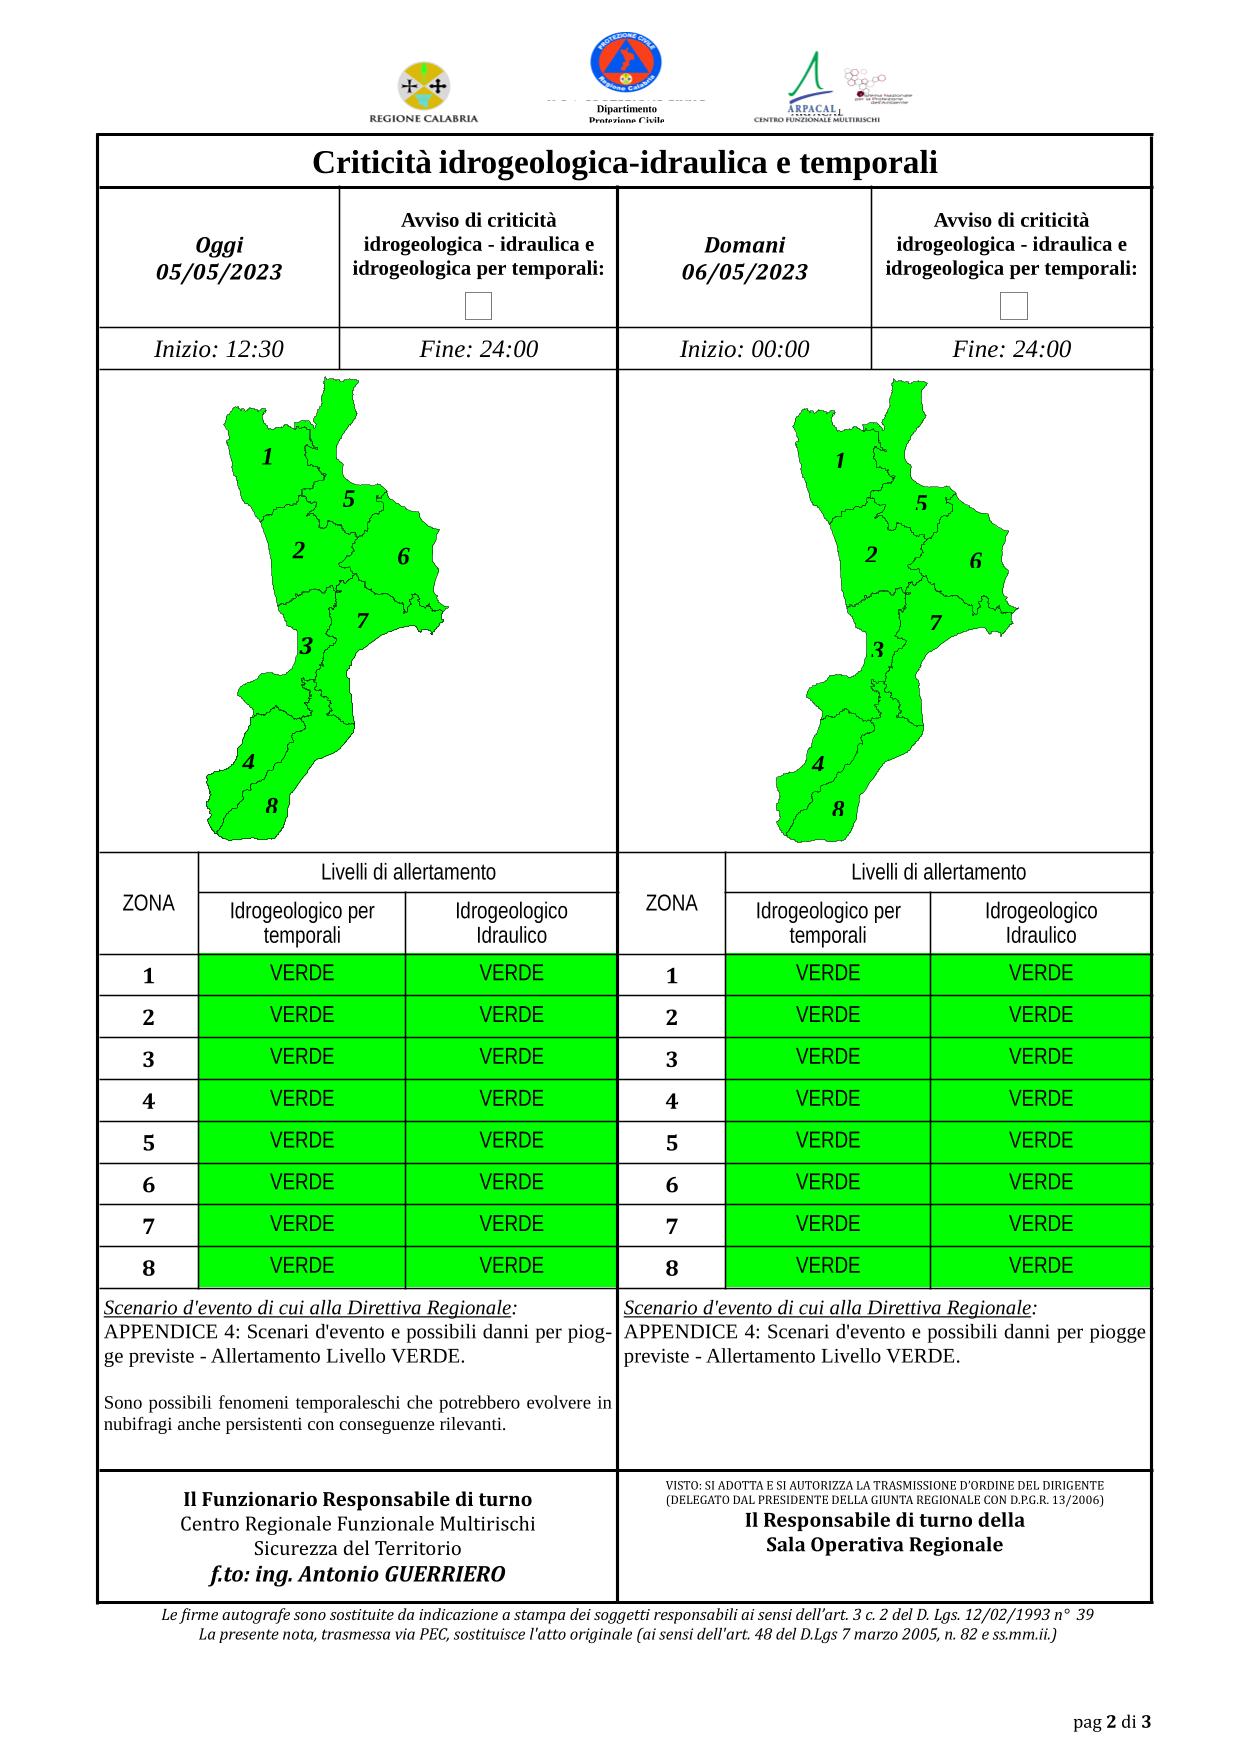 Criticità idrogeologica-idraulica e temporali in Calabria 05-05-2023